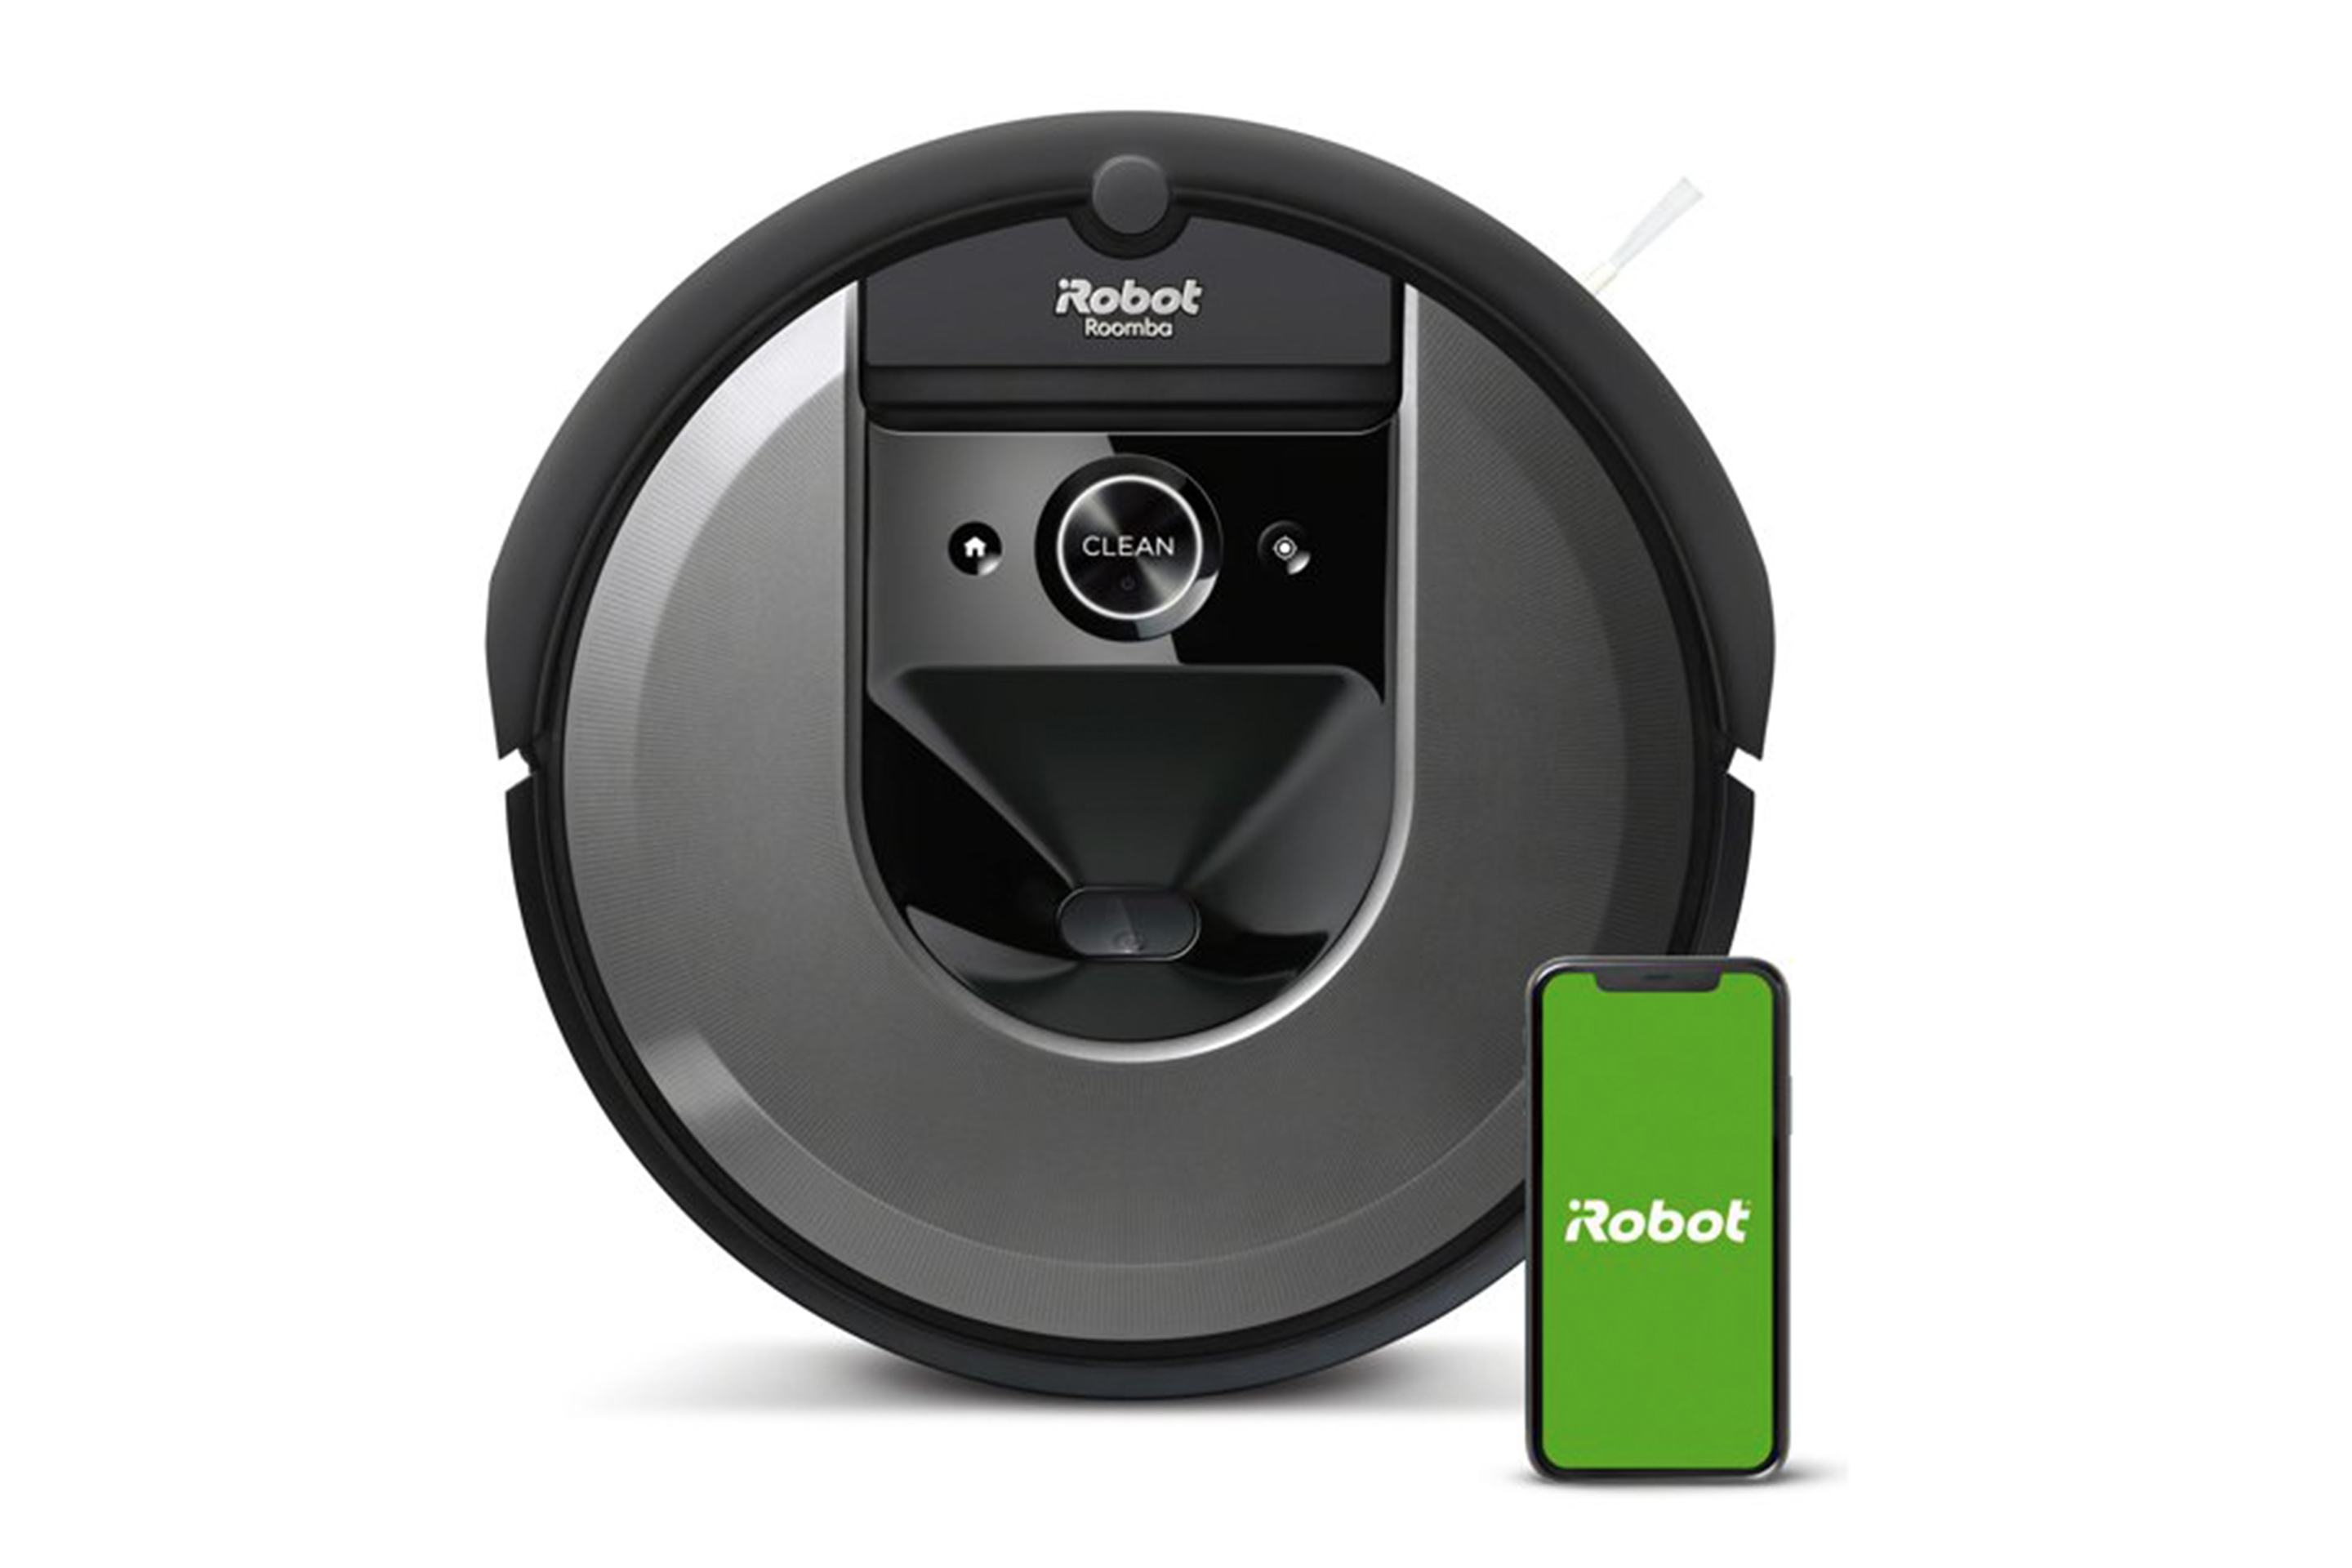 iRobot Roomba i7 (7150) Robot Vacuum